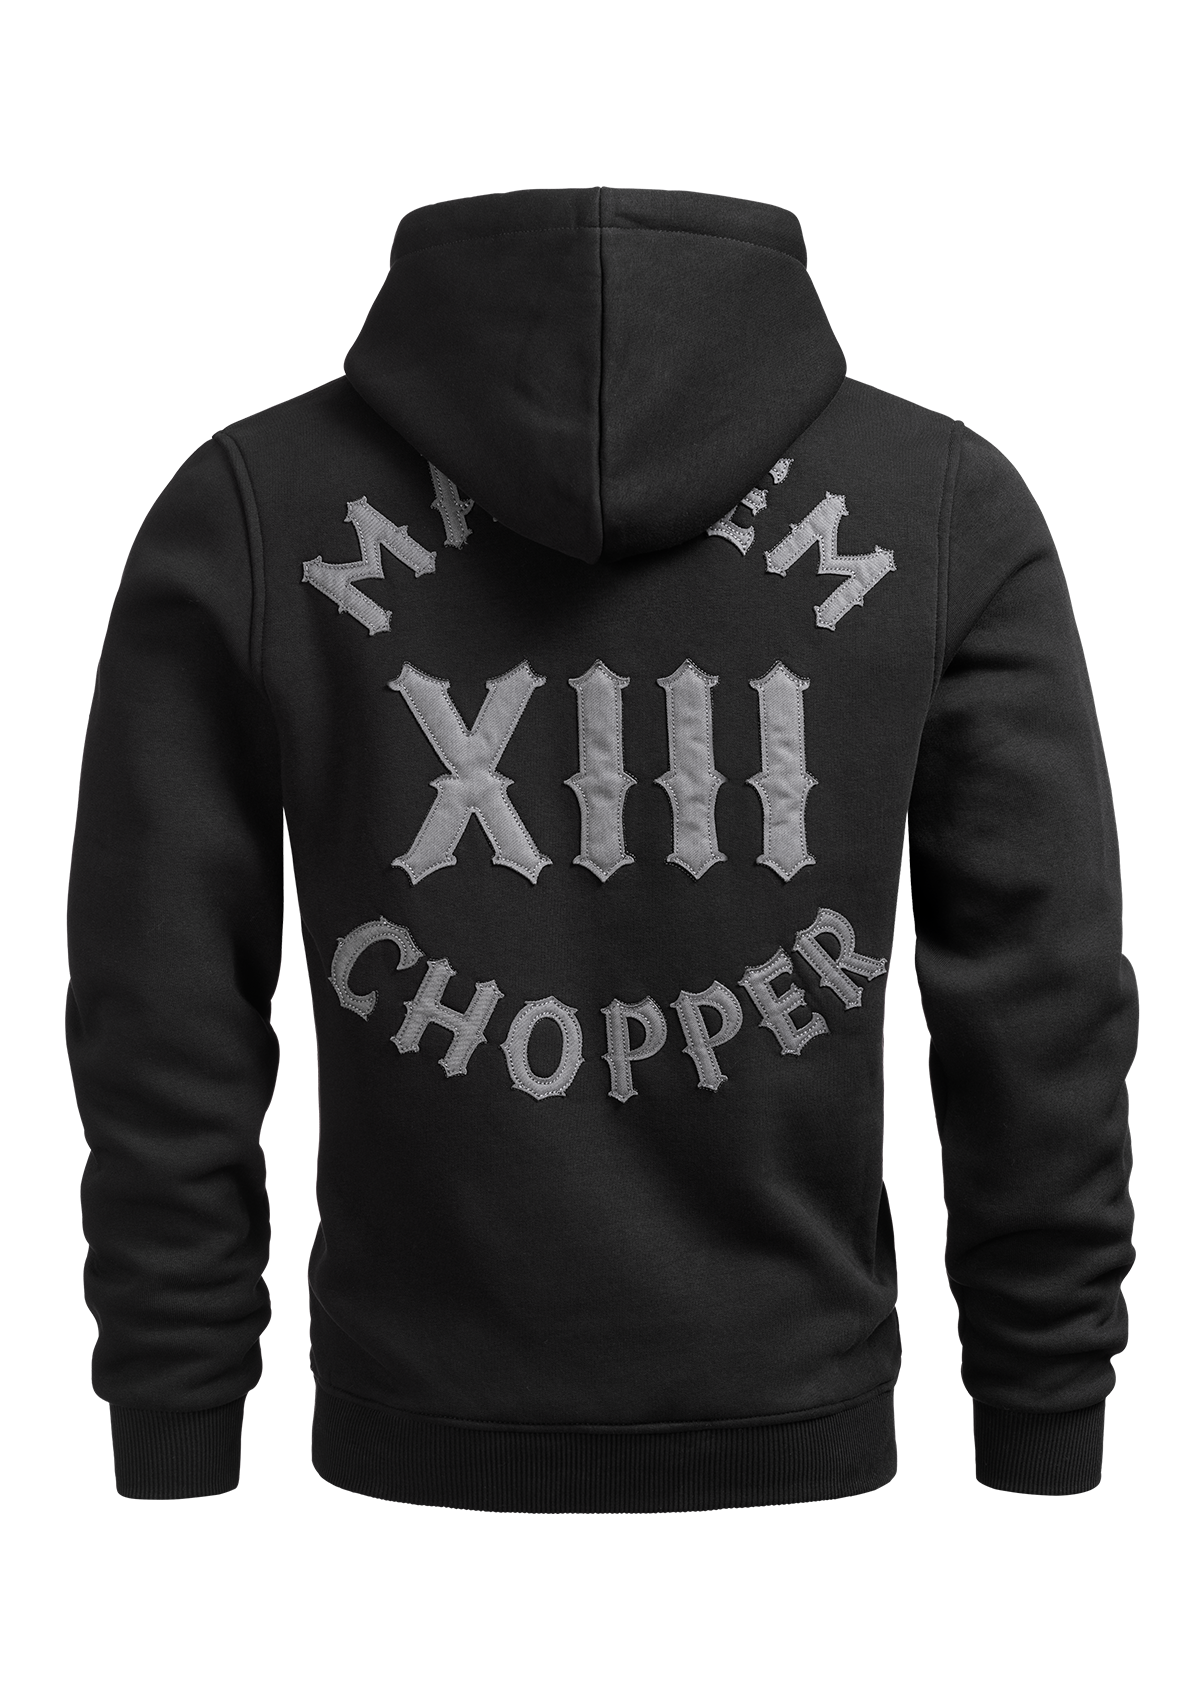 Hoody Mayhem Chopper S/G MK3